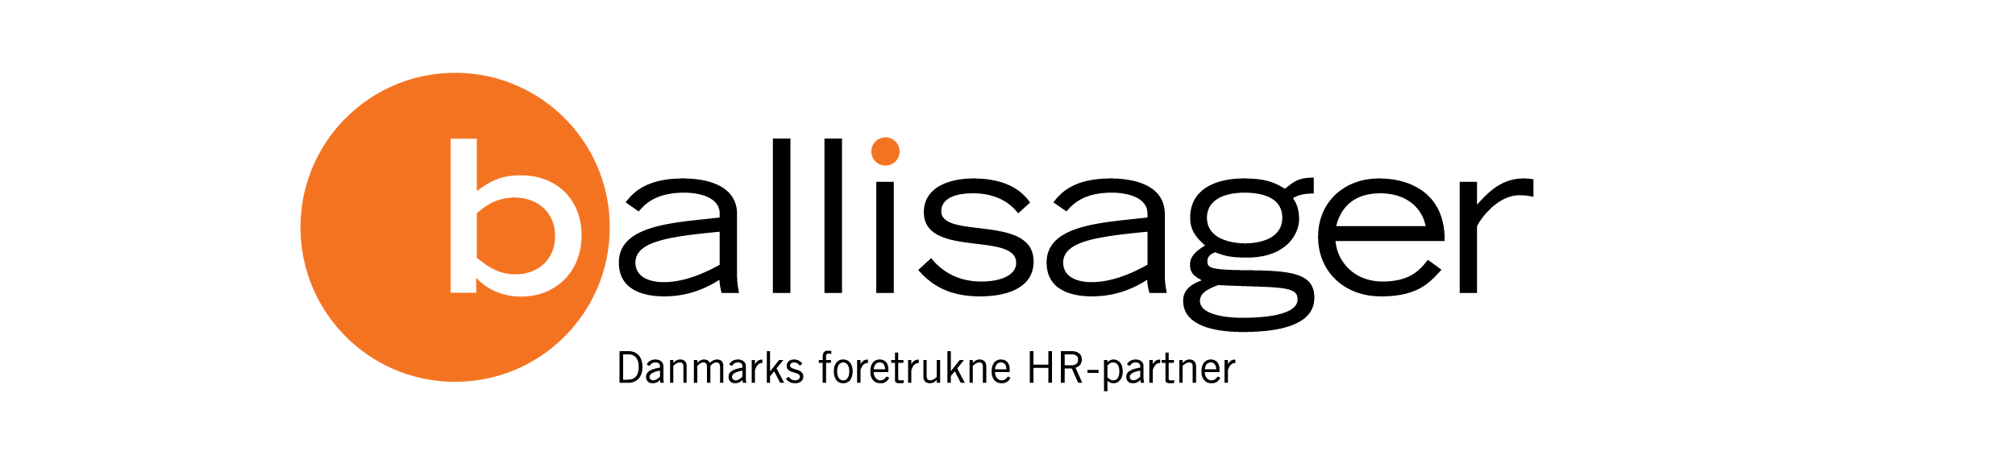 BallisagerLogo_pos_HR_partner_transparent